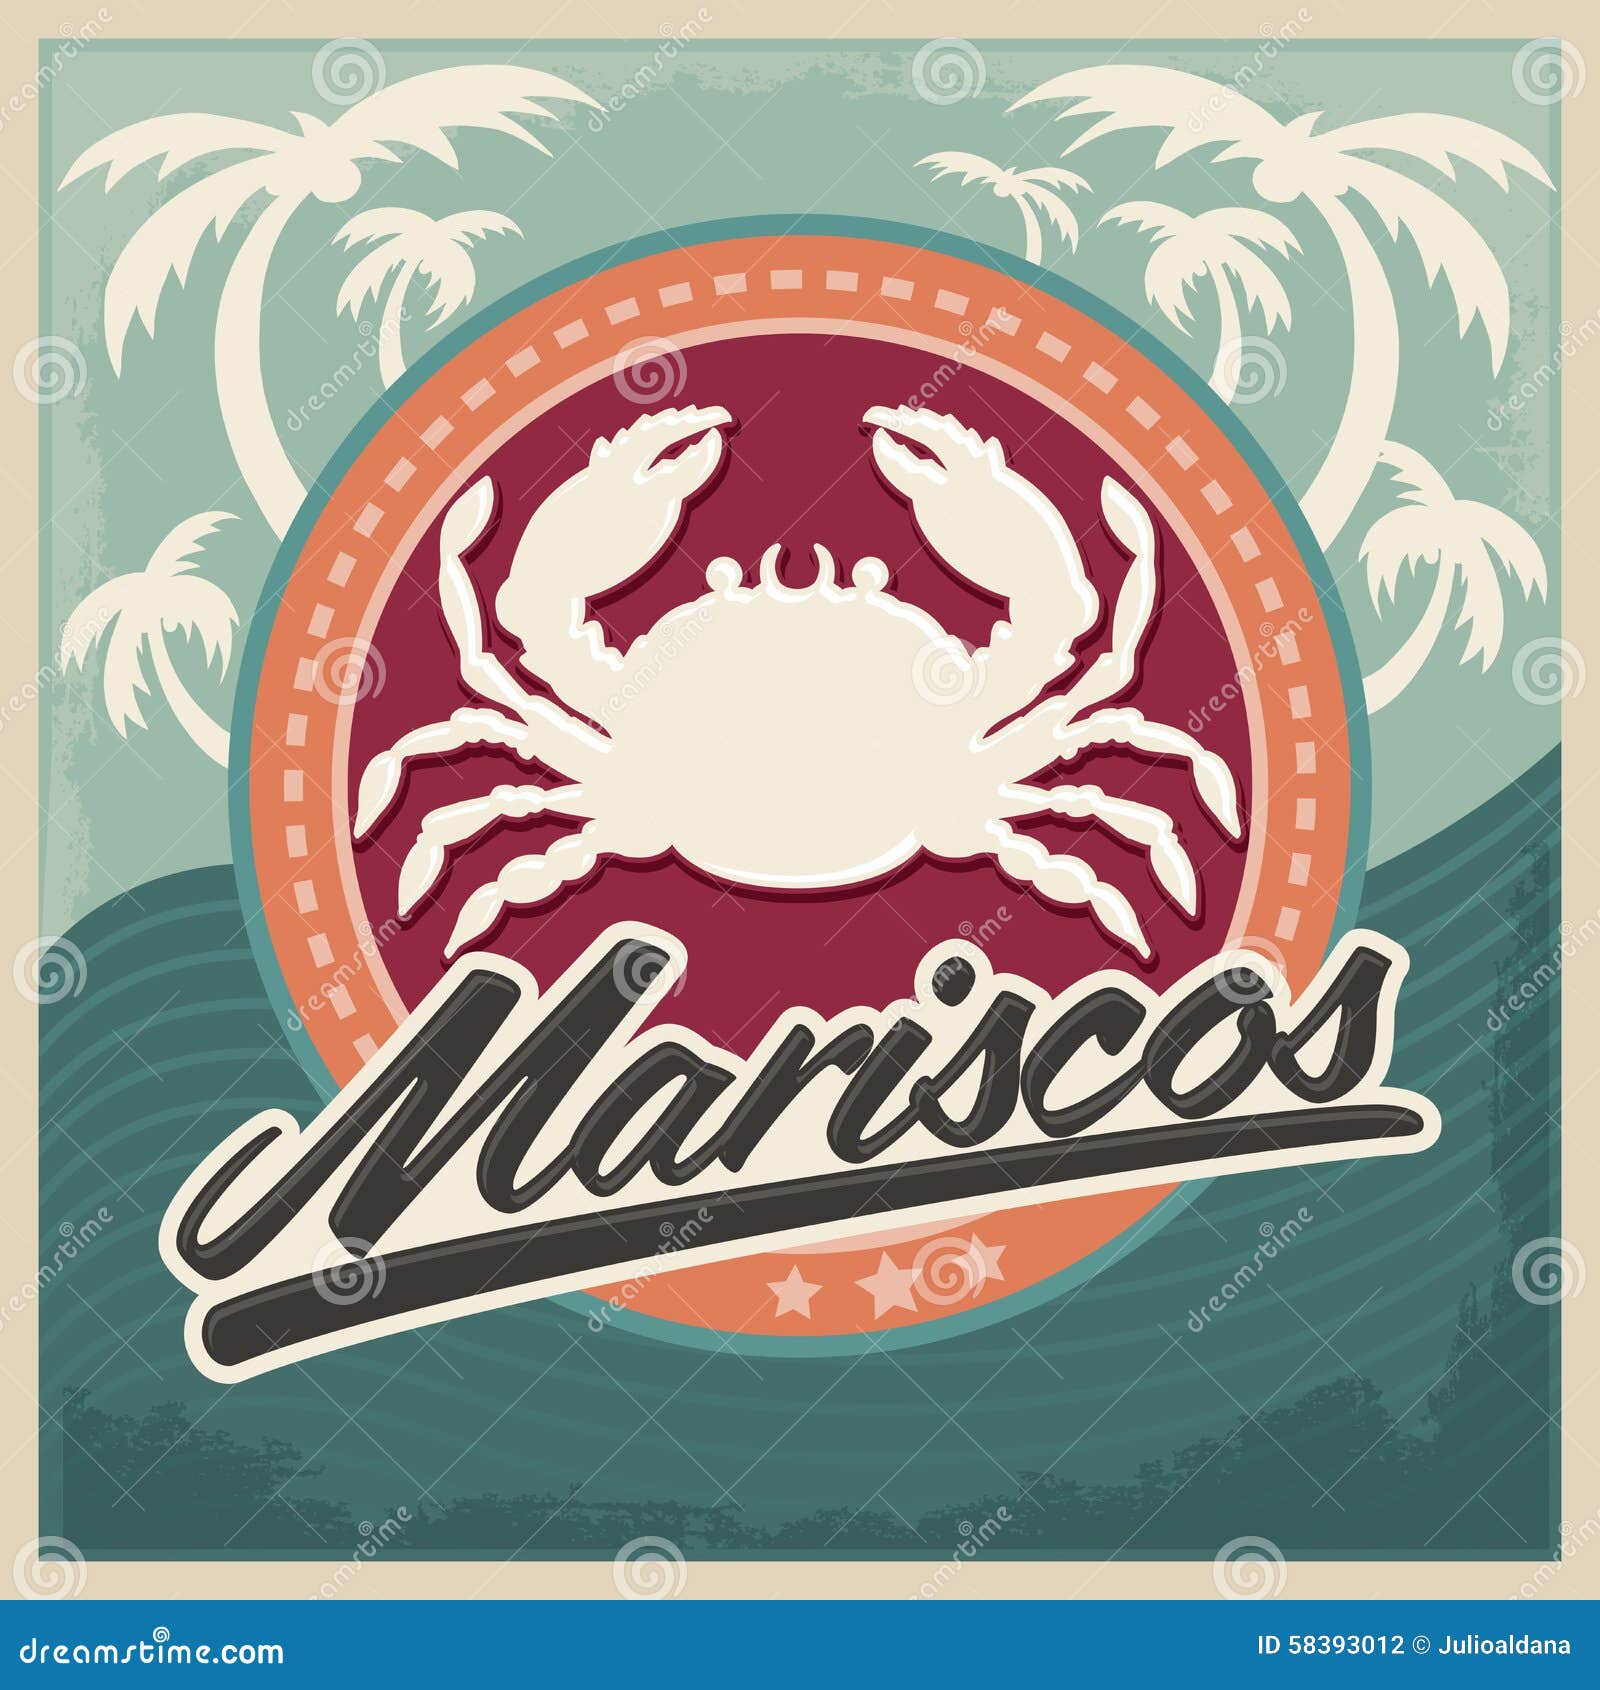 mariscos - seafood spanish text